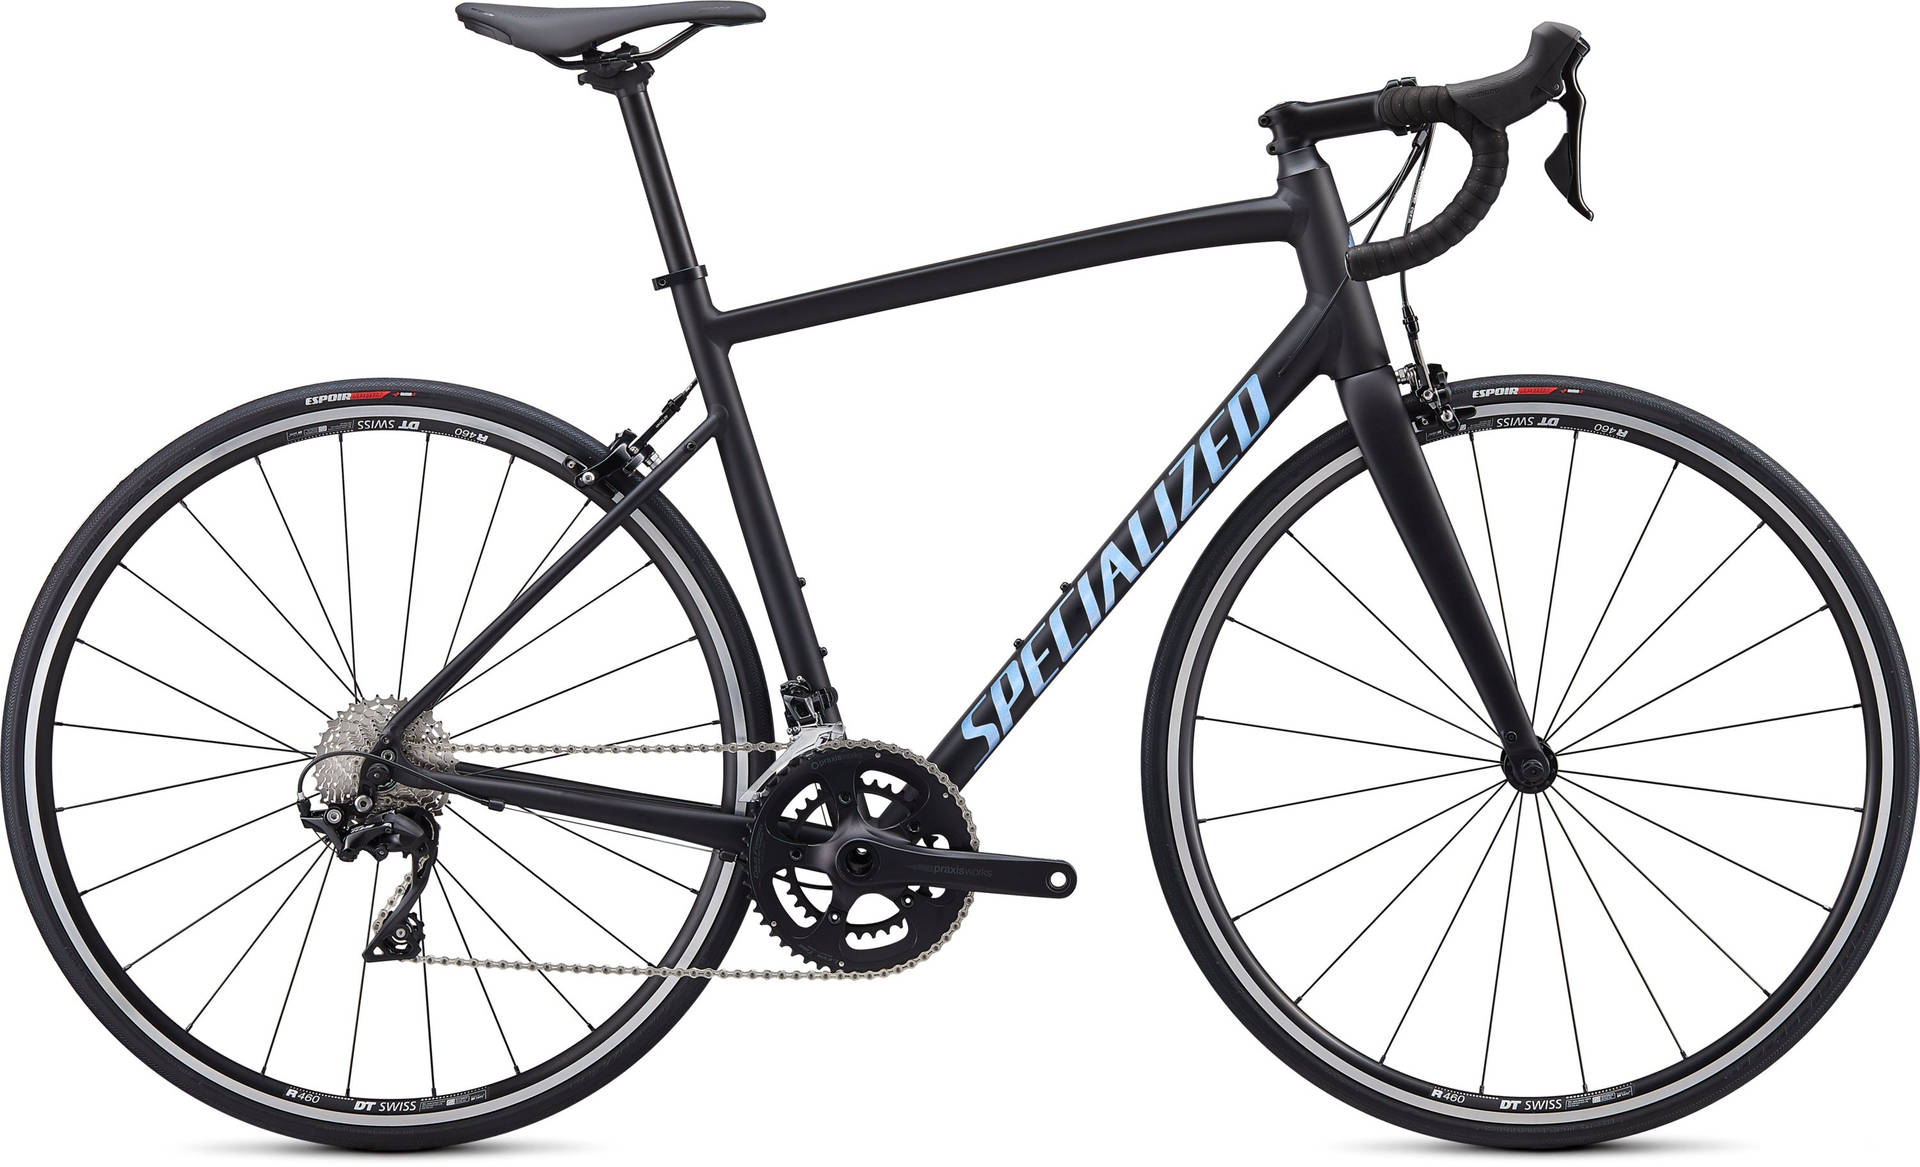 Bicicletaespecializada Negro Y Plateada Con Detalles Azules Fondo de pantalla